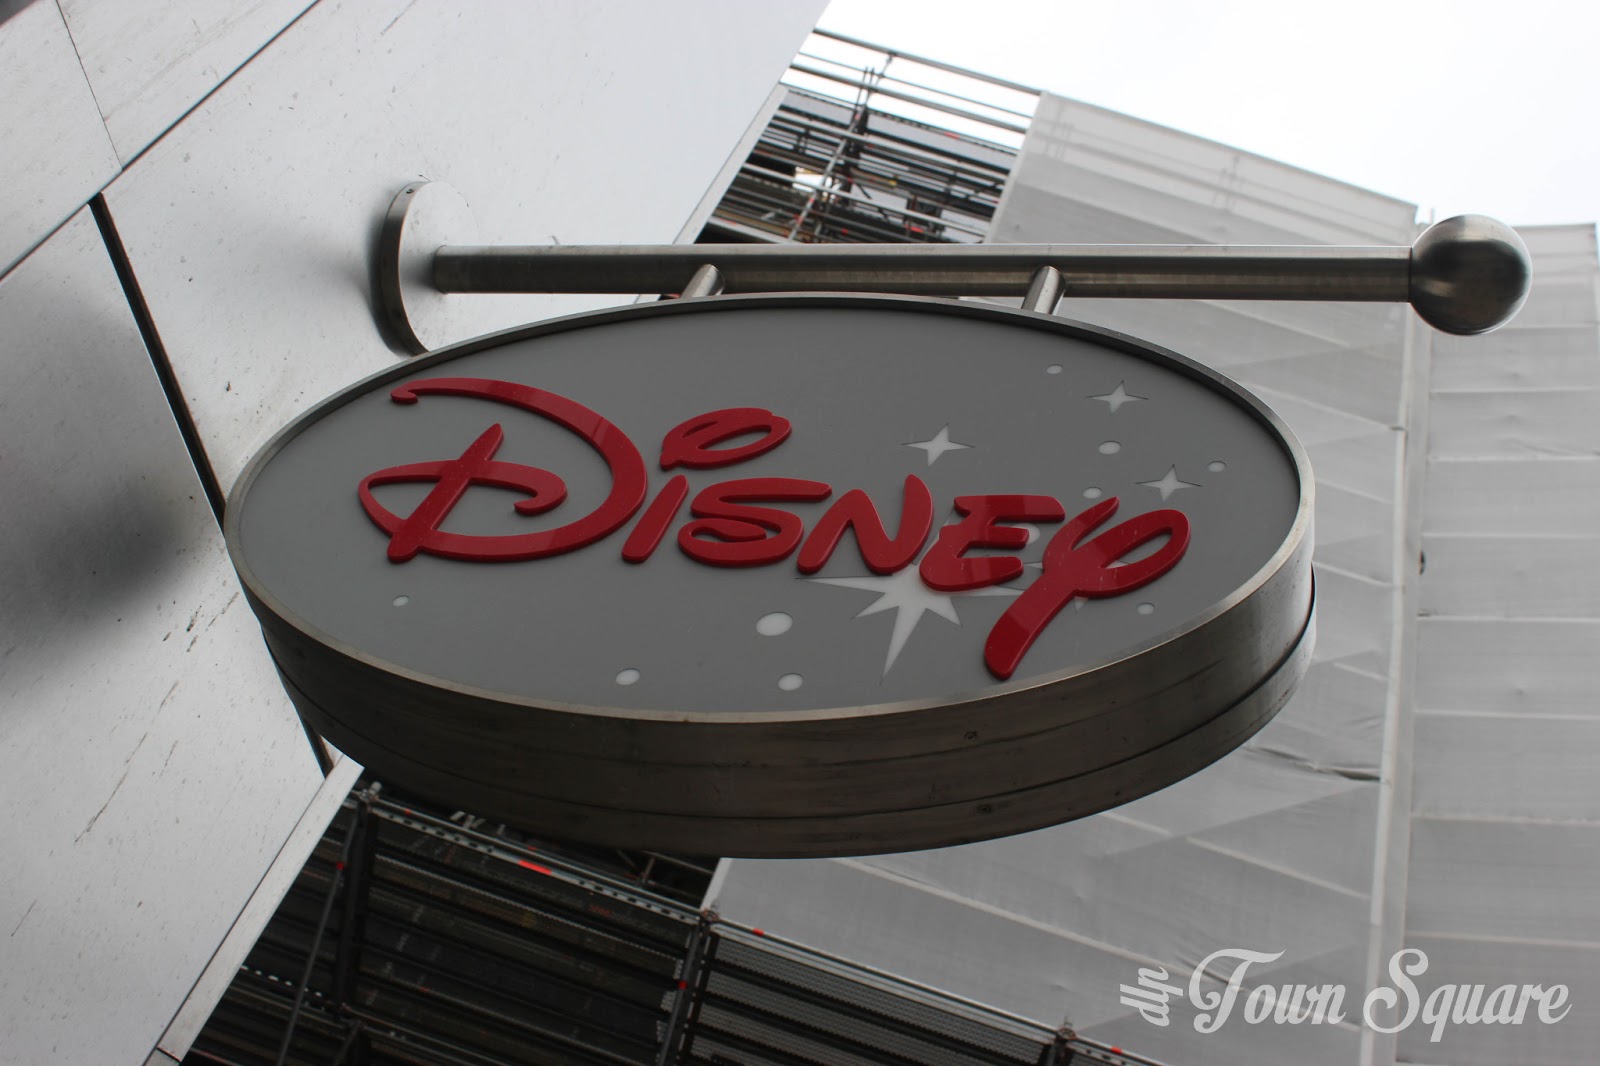 Disney Store sign